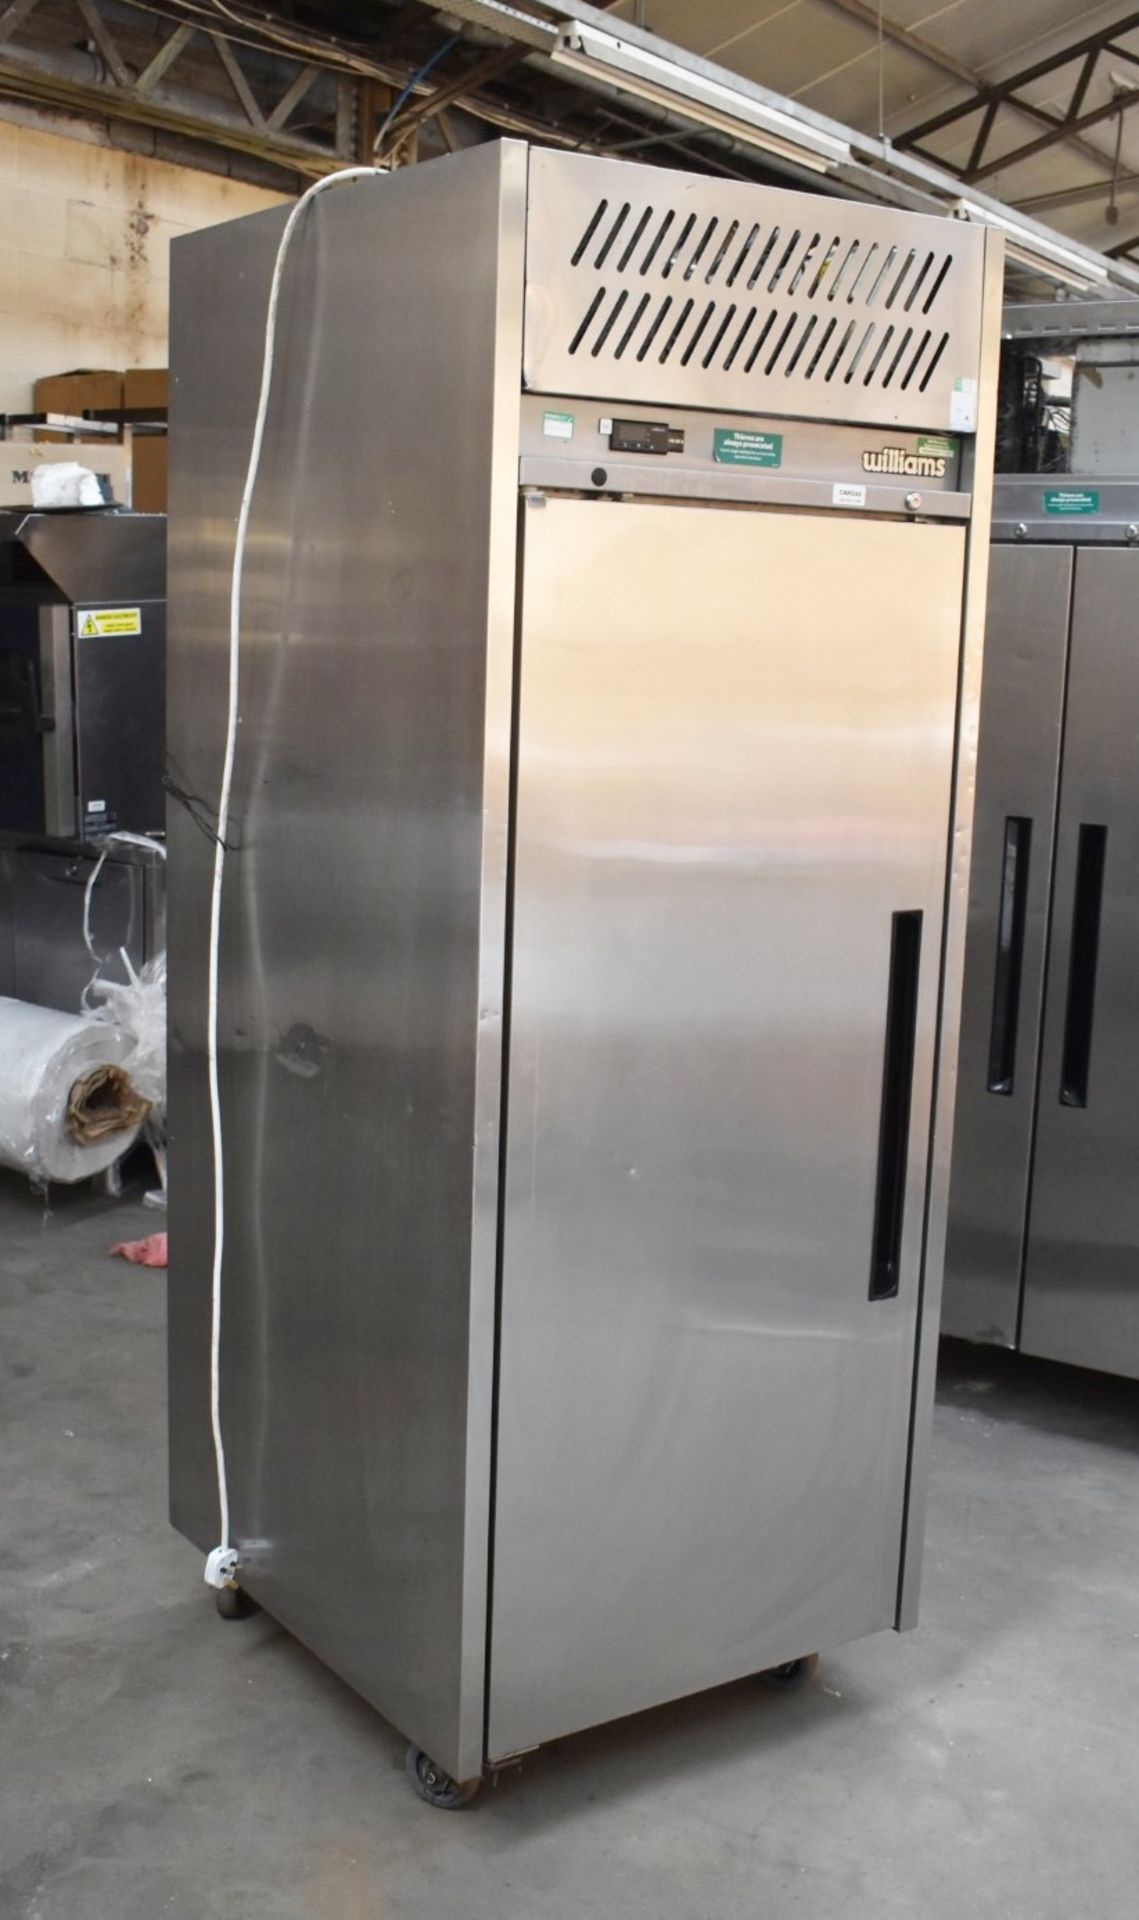 1 x Williams Jade Upright Single Door Refrigerator Stainless Steel Exterior & Internal Bakery Trays